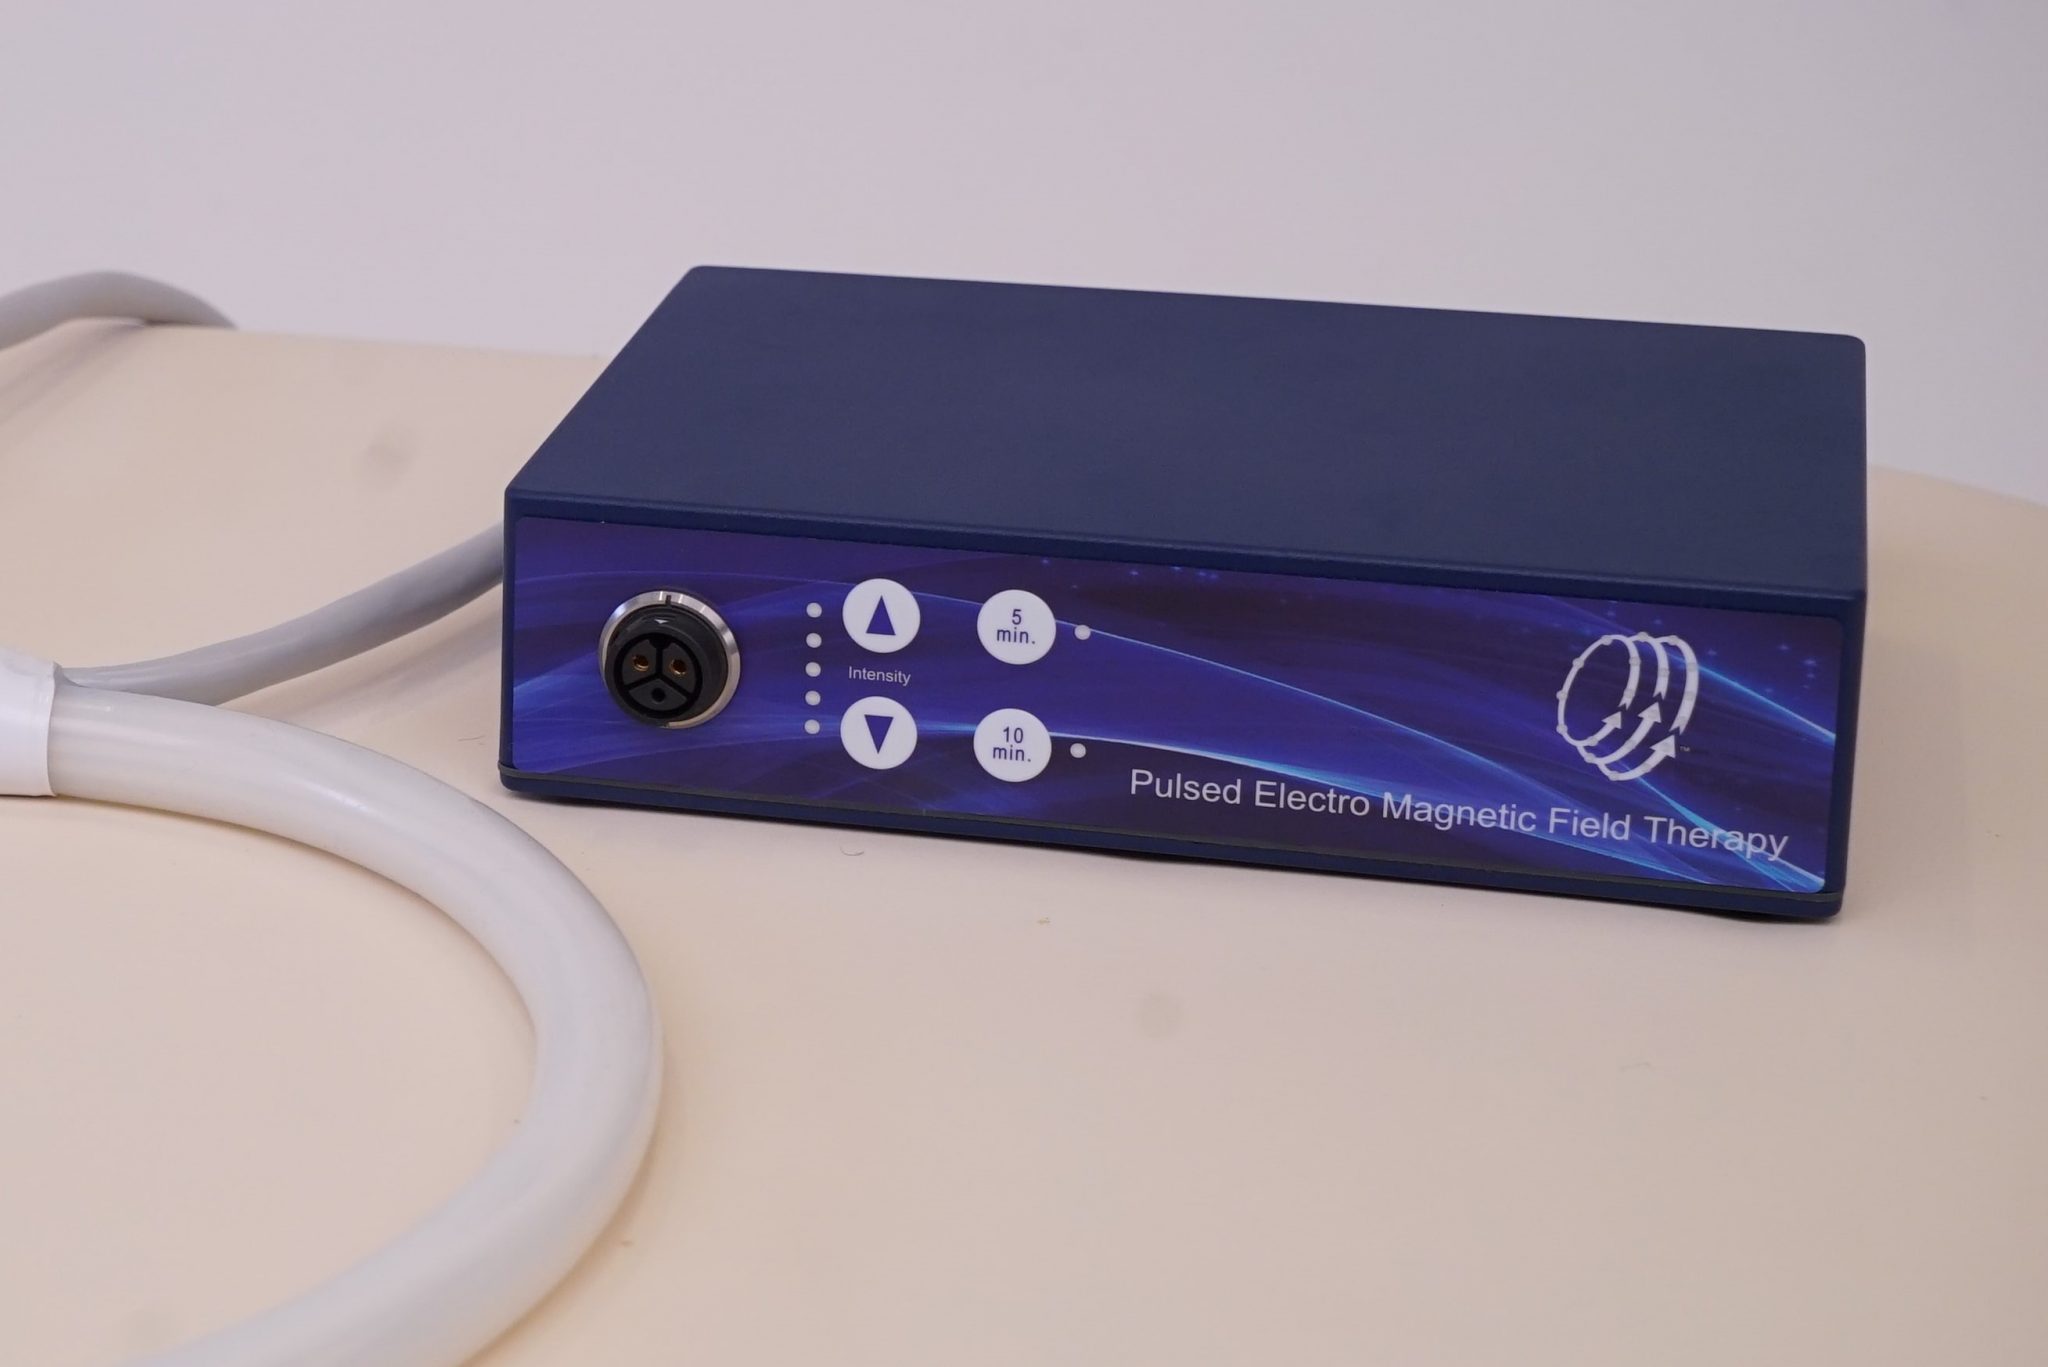 TeslaFit PEMF – Clinical PEMF therapy machines